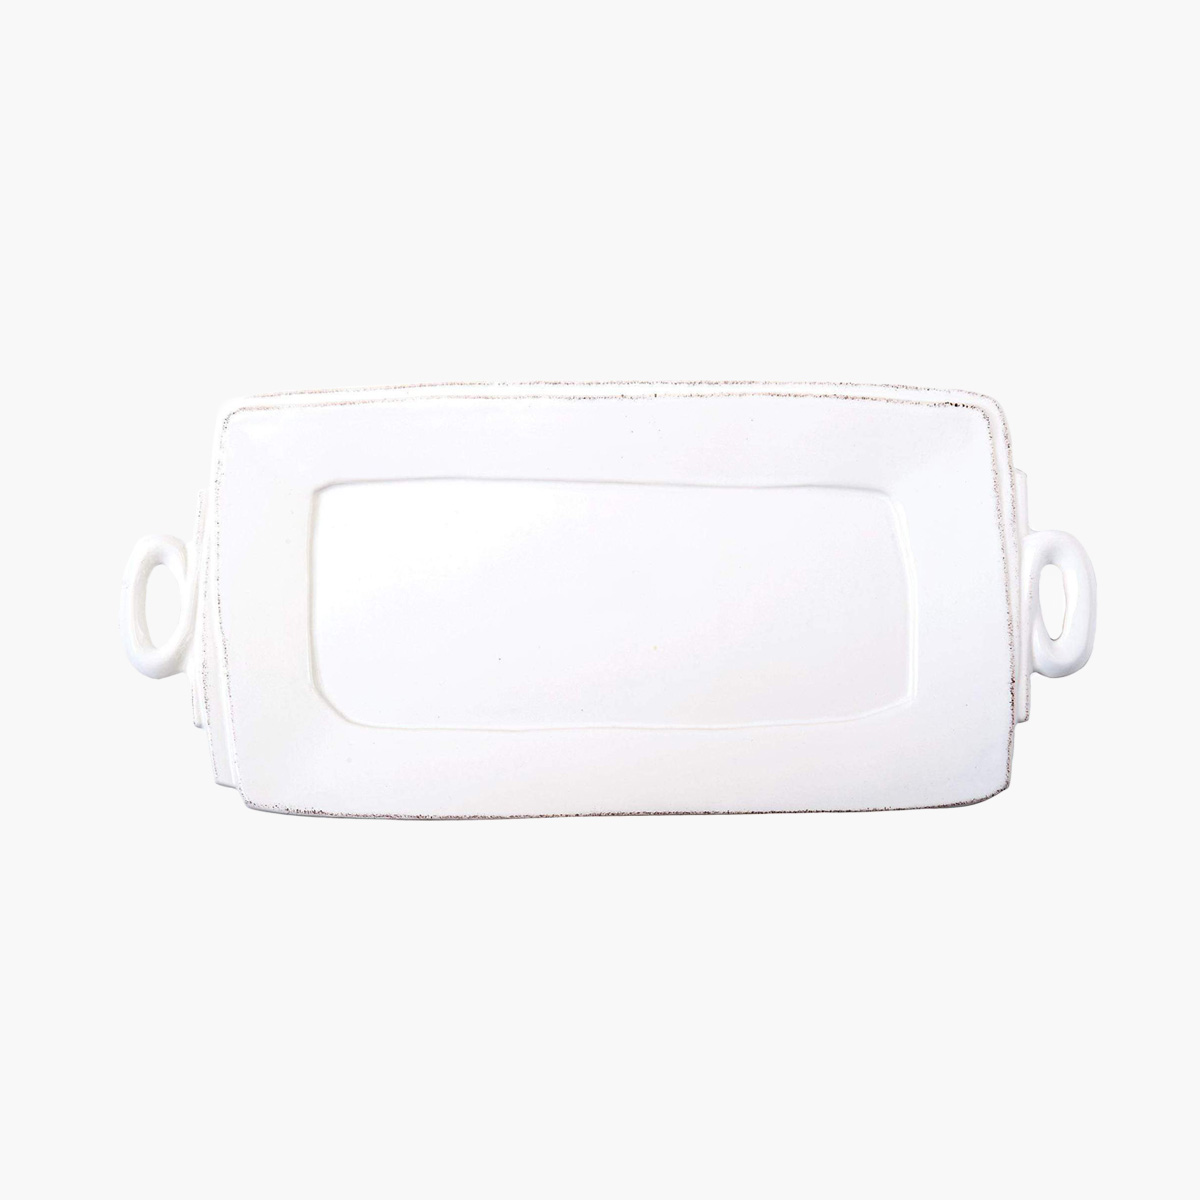 A white rectangular serving platter.